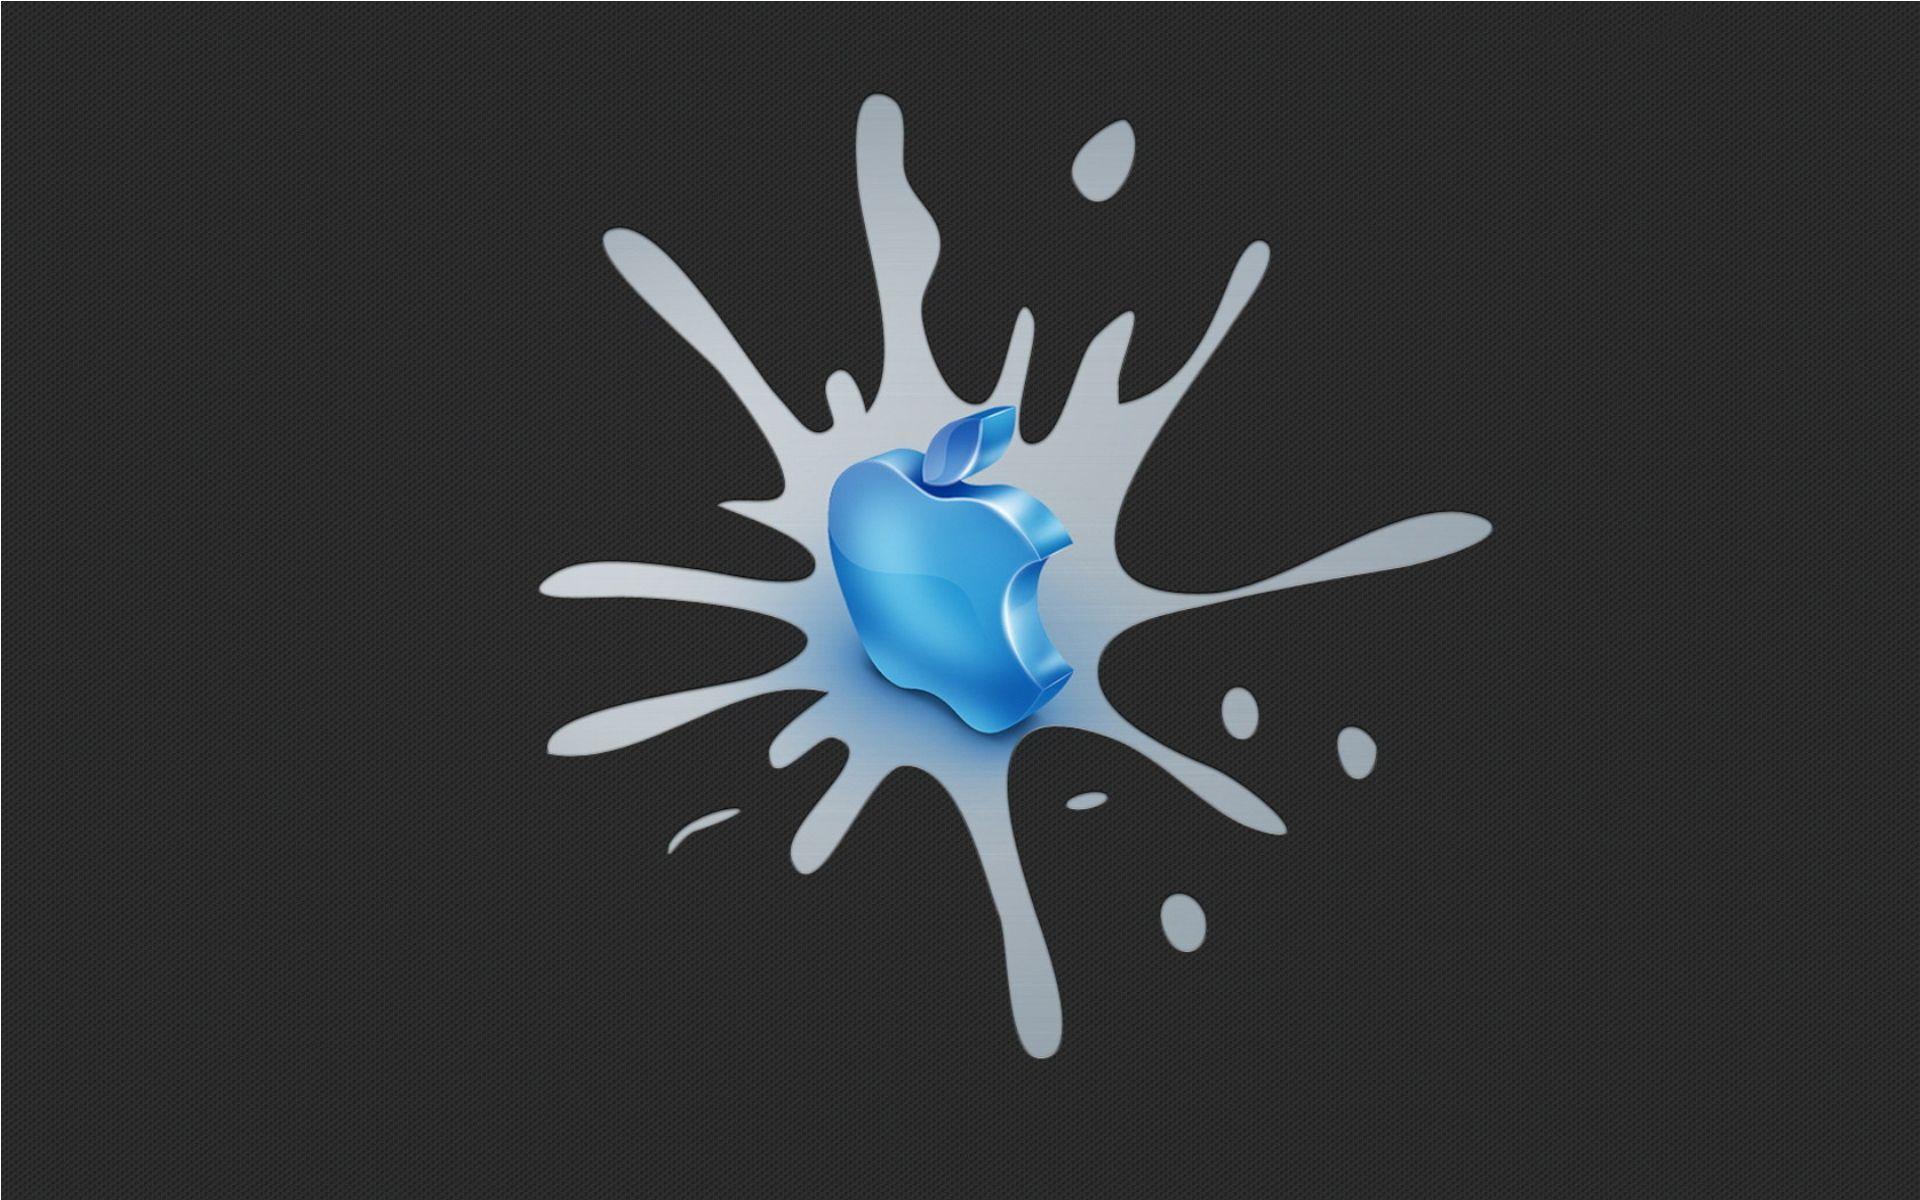 Logos For > Apple Logo 2013 Hd Wallpapers